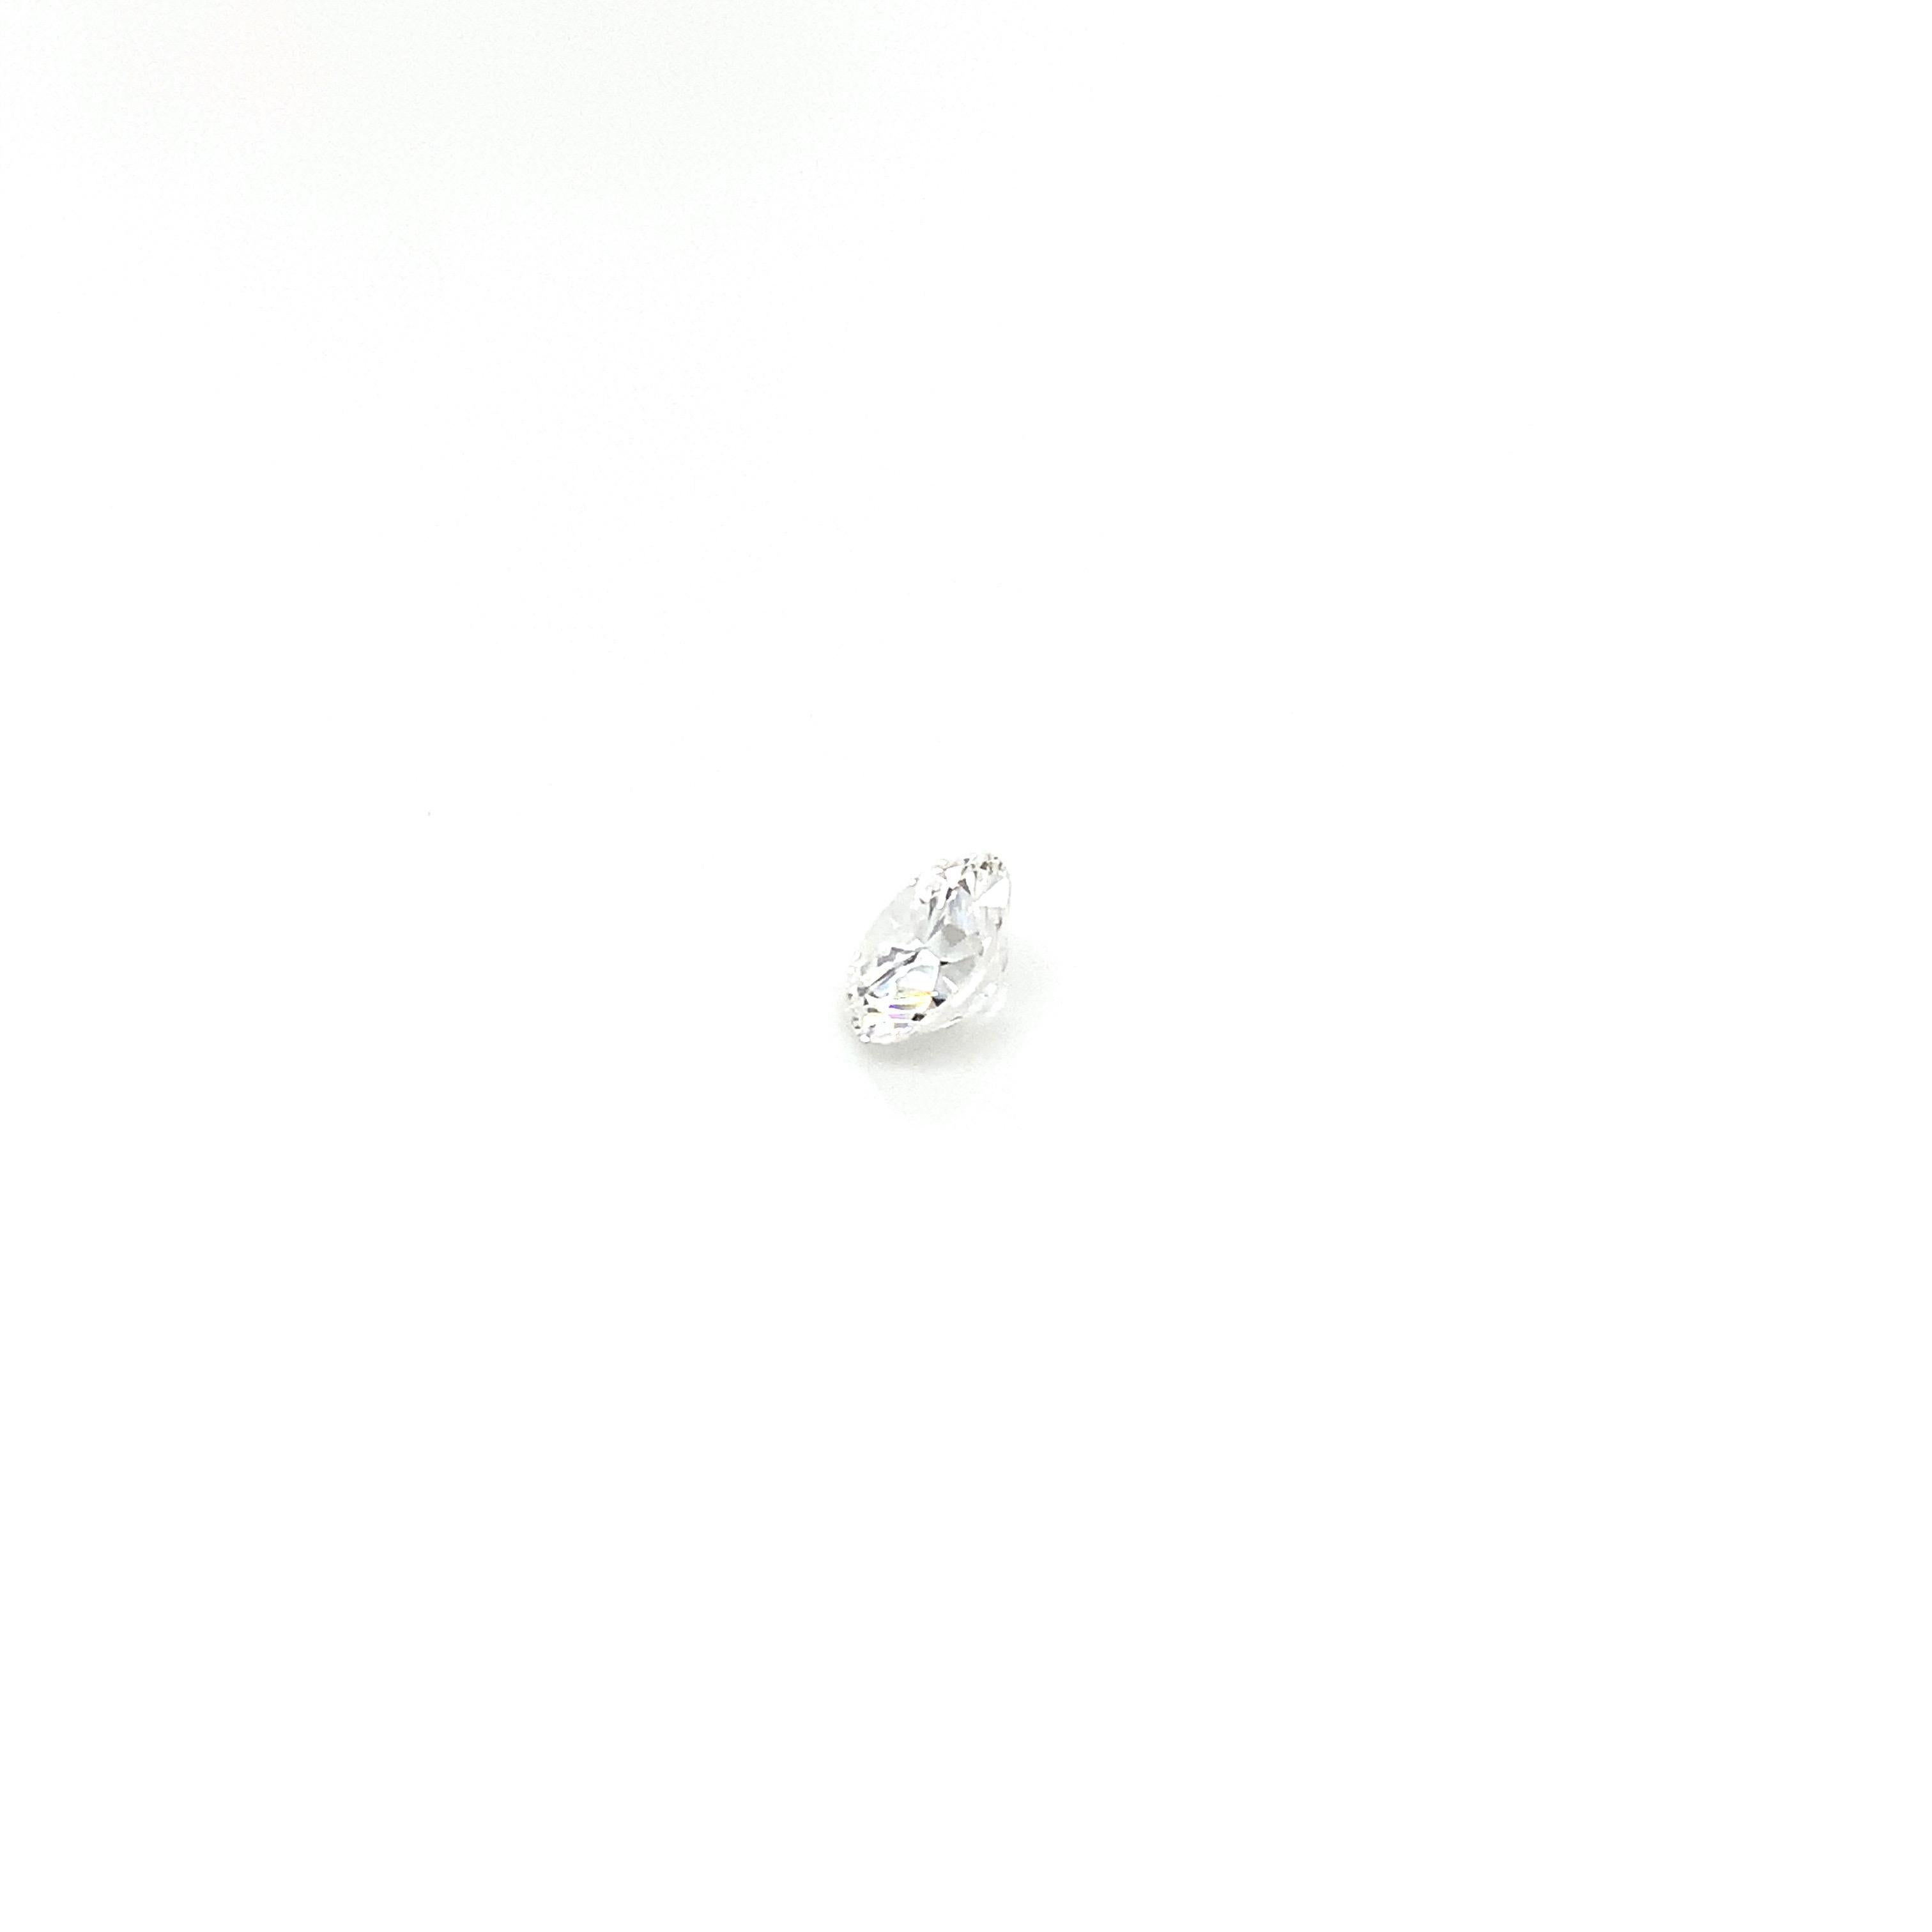 Women's or Men's GIA Certified 0.74 Carat Round Brilliant Diamond For Sale